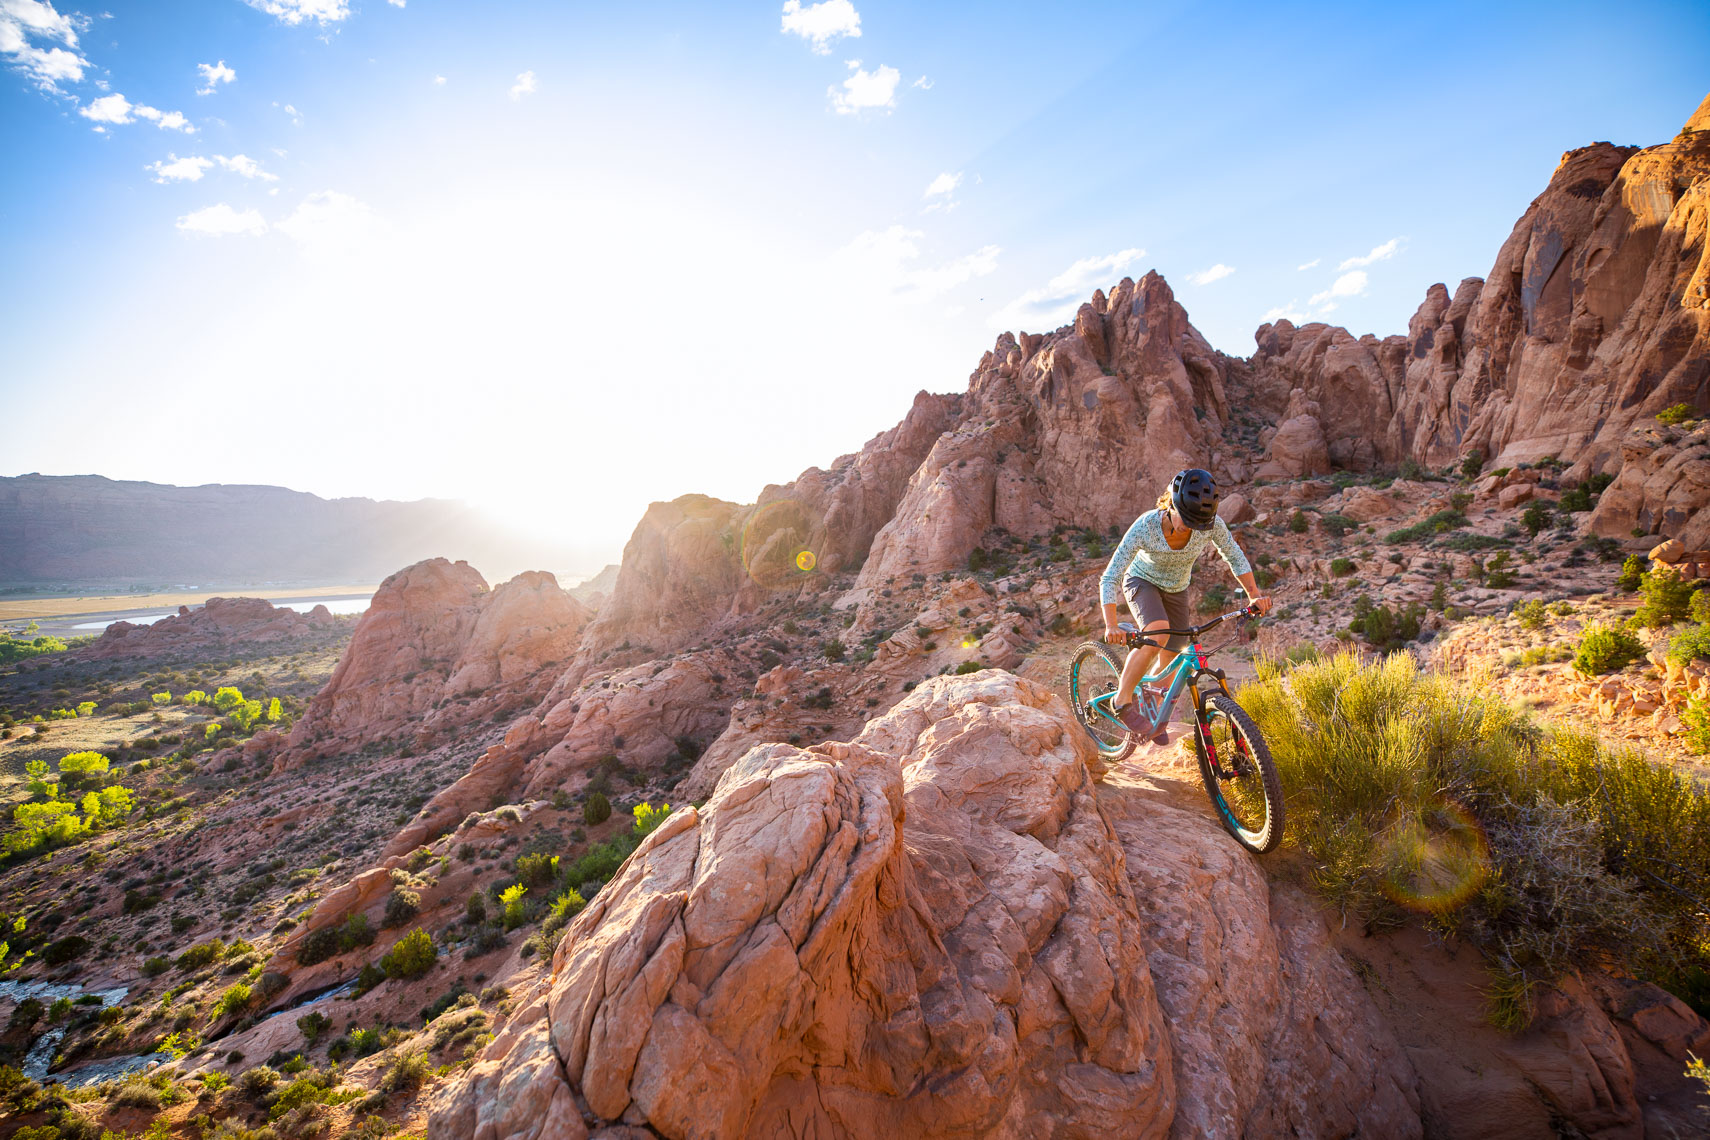 Healthcare and fitness photographer Robert Houser photographs mountain biking on location in Moab, Utah